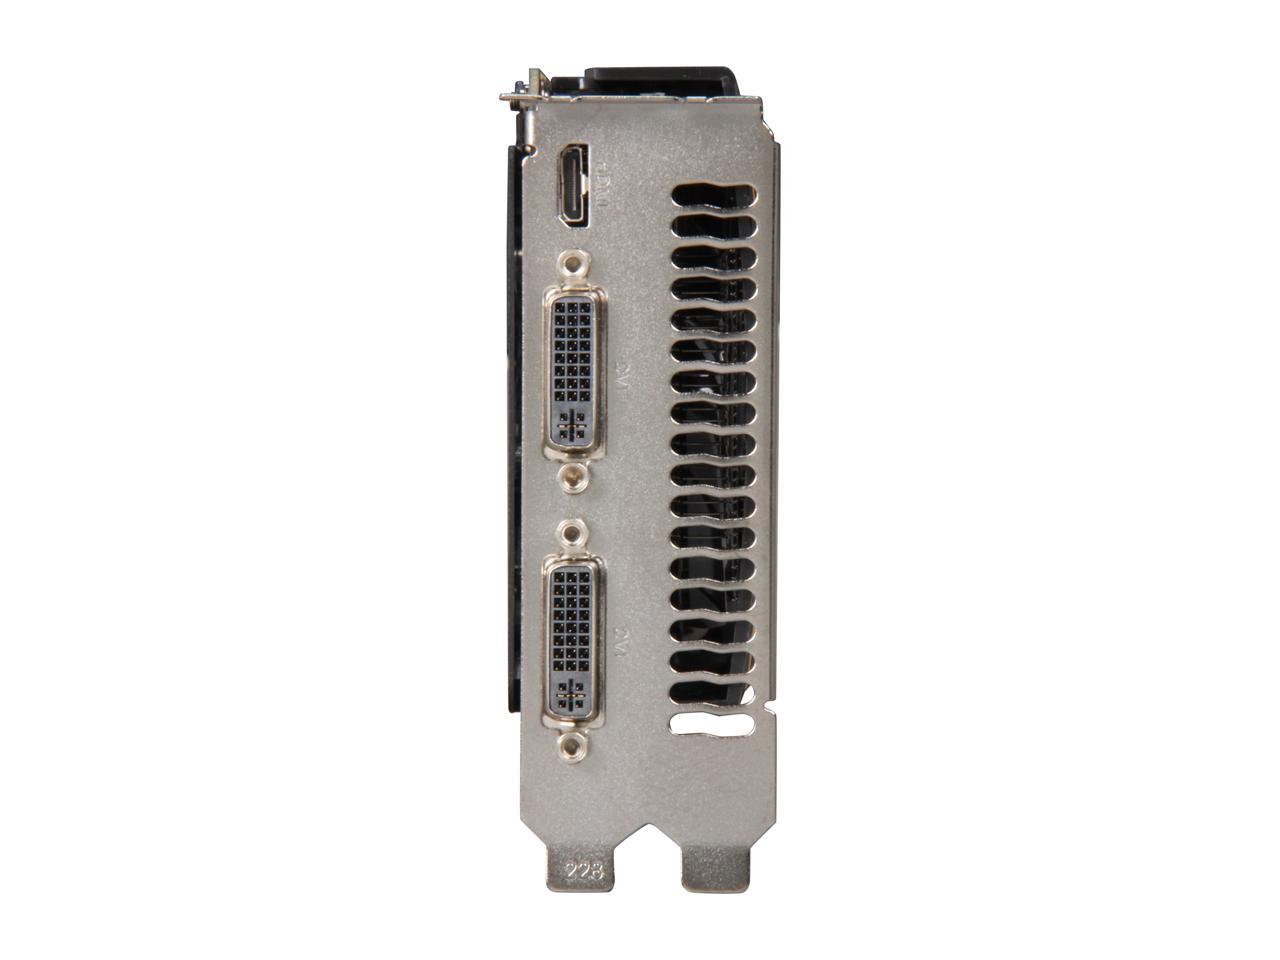 EVGA 01G-P3-1466-KR GeForce GTX 560 (Fermi) DS SSC 1GB 256-bit GDDR5 PCI Express 2.0 x16 HDCP Ready SLI Support Video Card